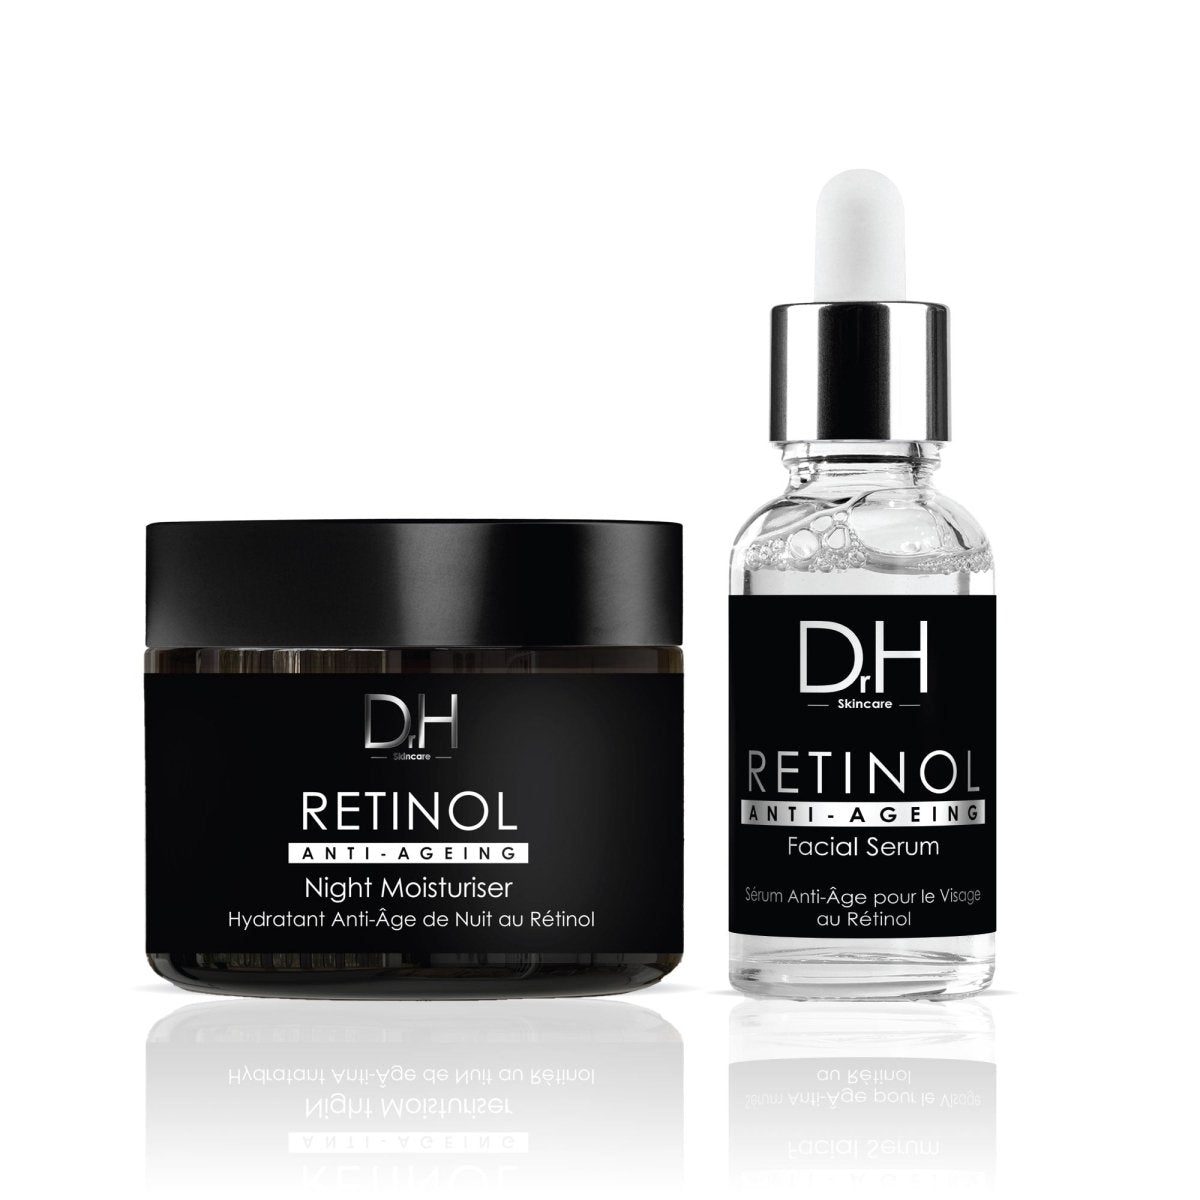 Retinol Anti - Ageing Night Moisturiser 60ml + Anti - Aging Retinol Facial Serum 30ml - skinChemists